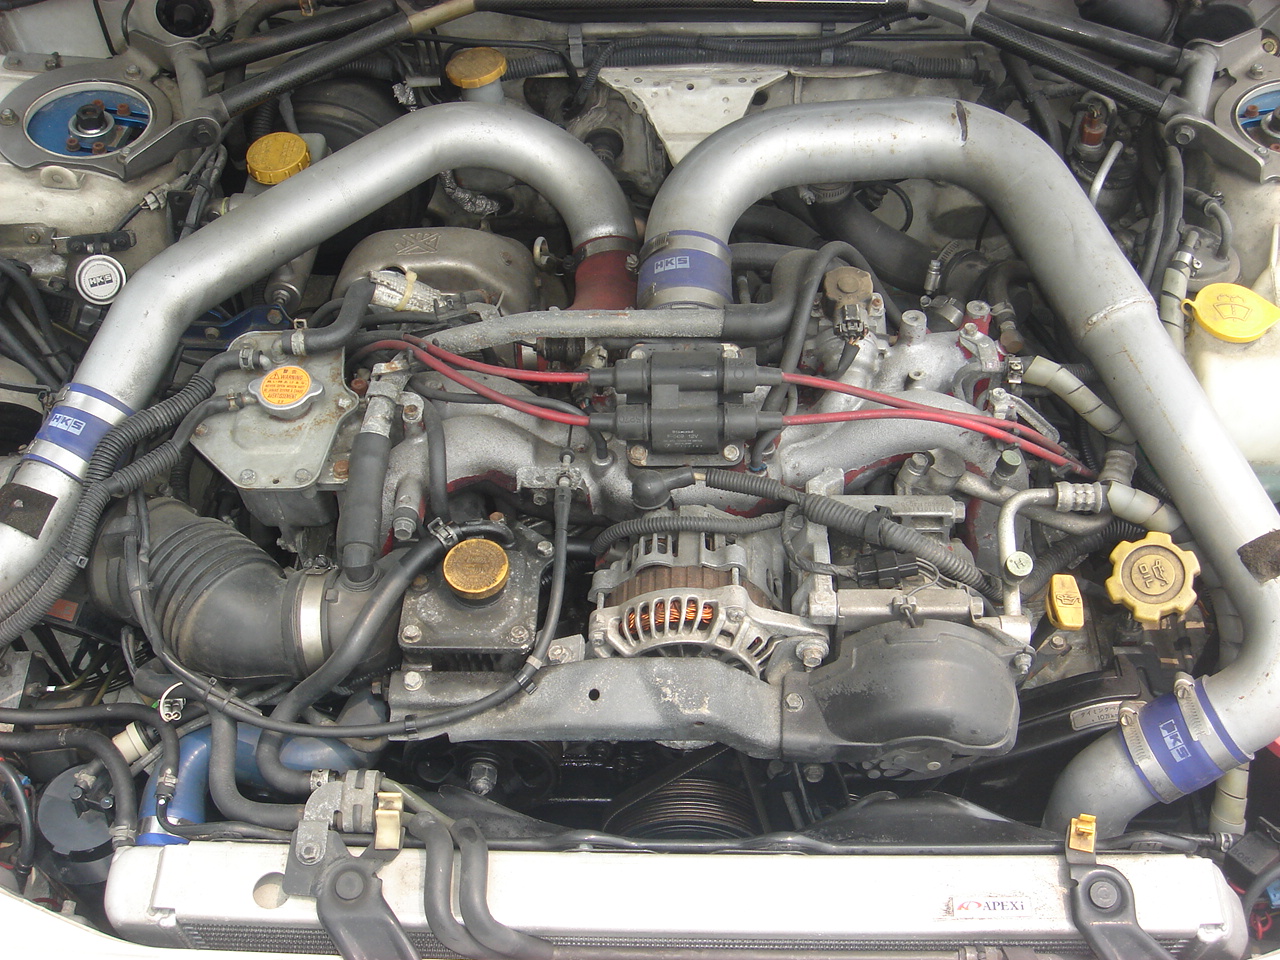 Subaru Impreza WRX STI, 1997, used for sale